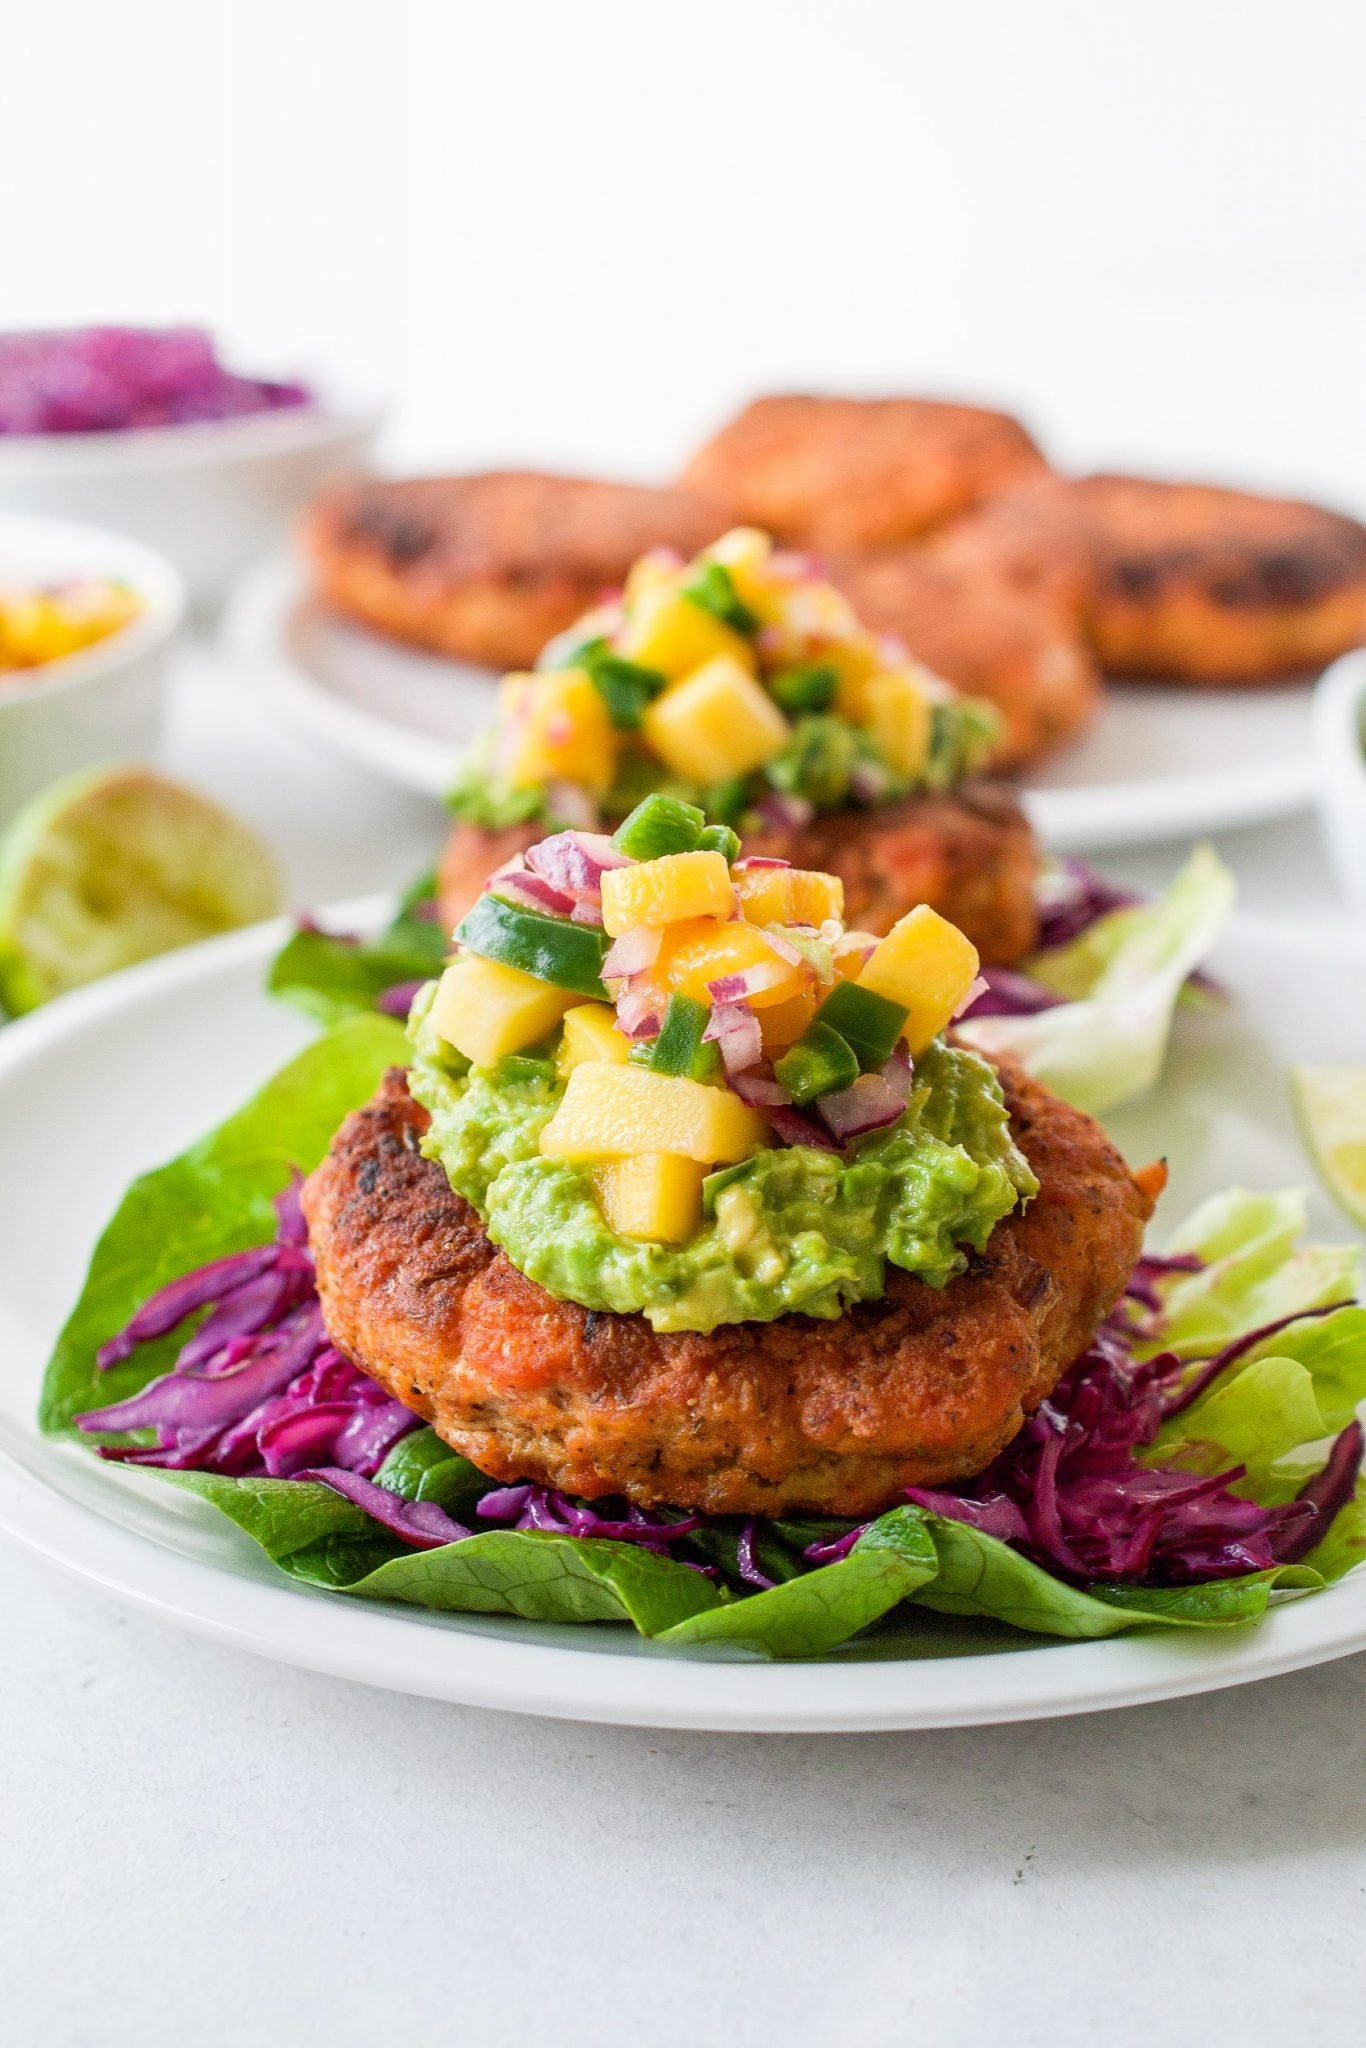 Salmon Burger With Garlic Herb Mayonnaise - Green Healthy Cooking